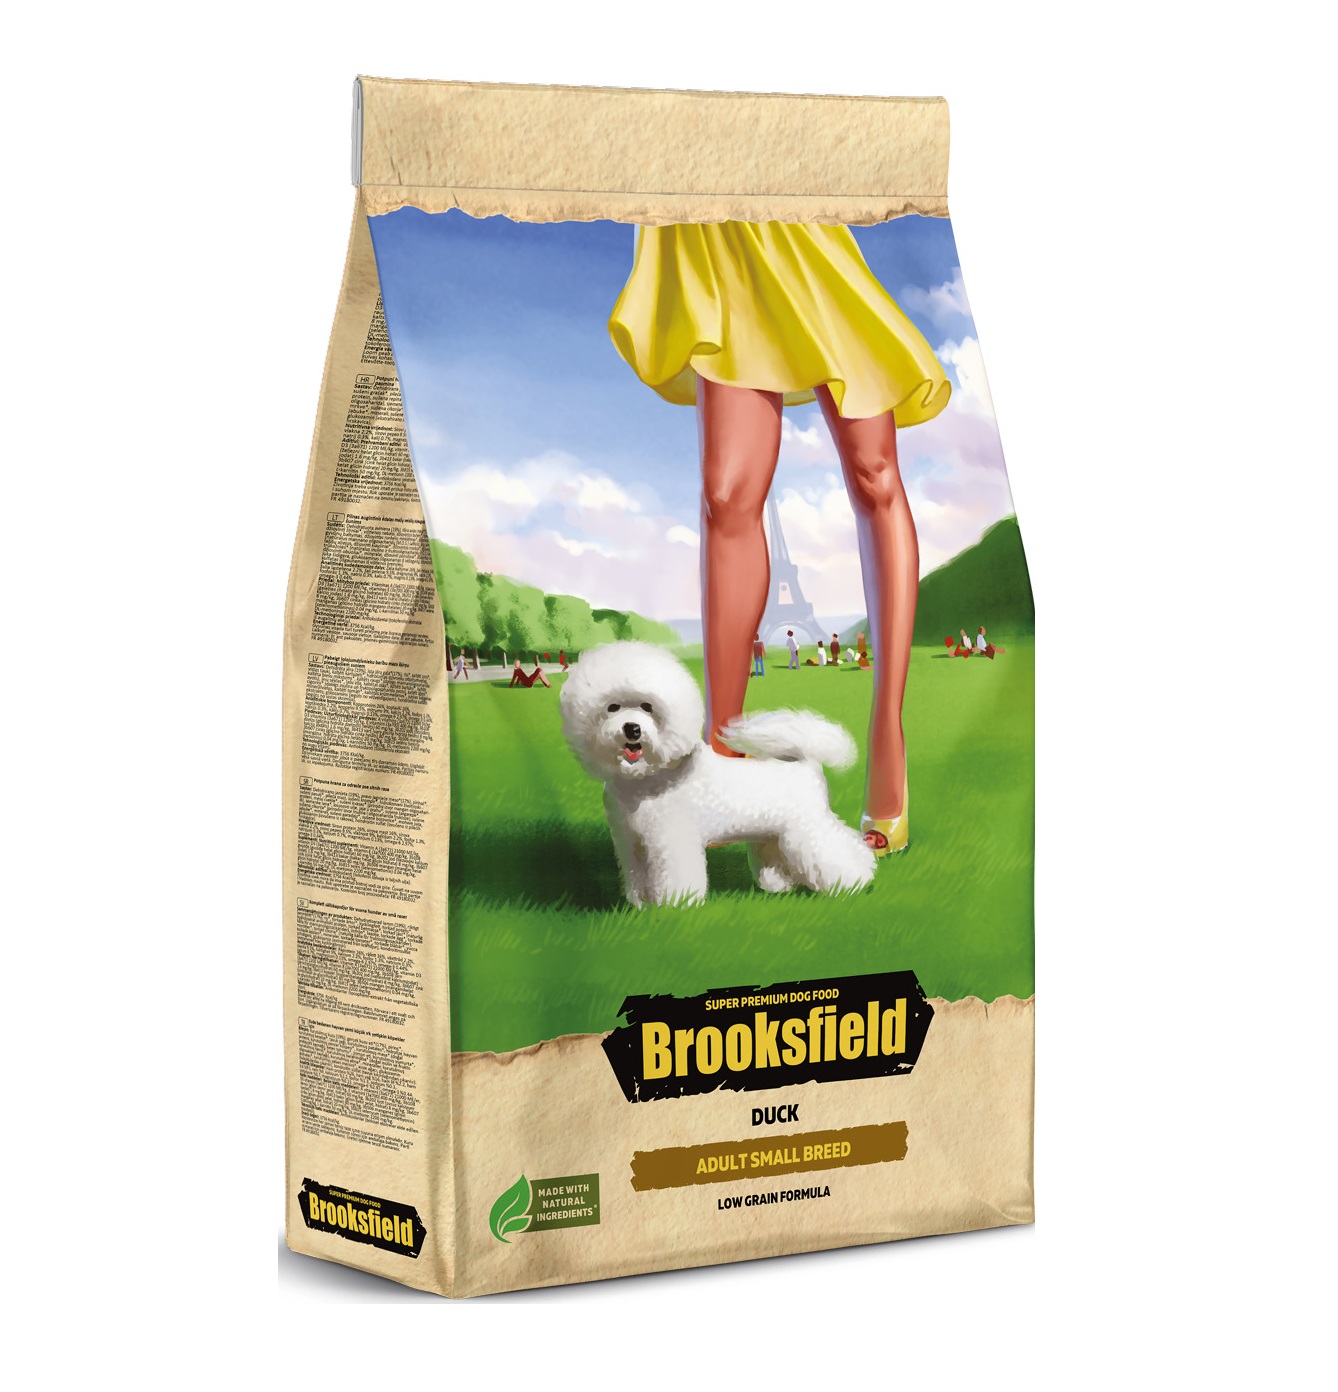 Бруксфилд 700гр - Утка - для Мелких собак (Brooksfield)